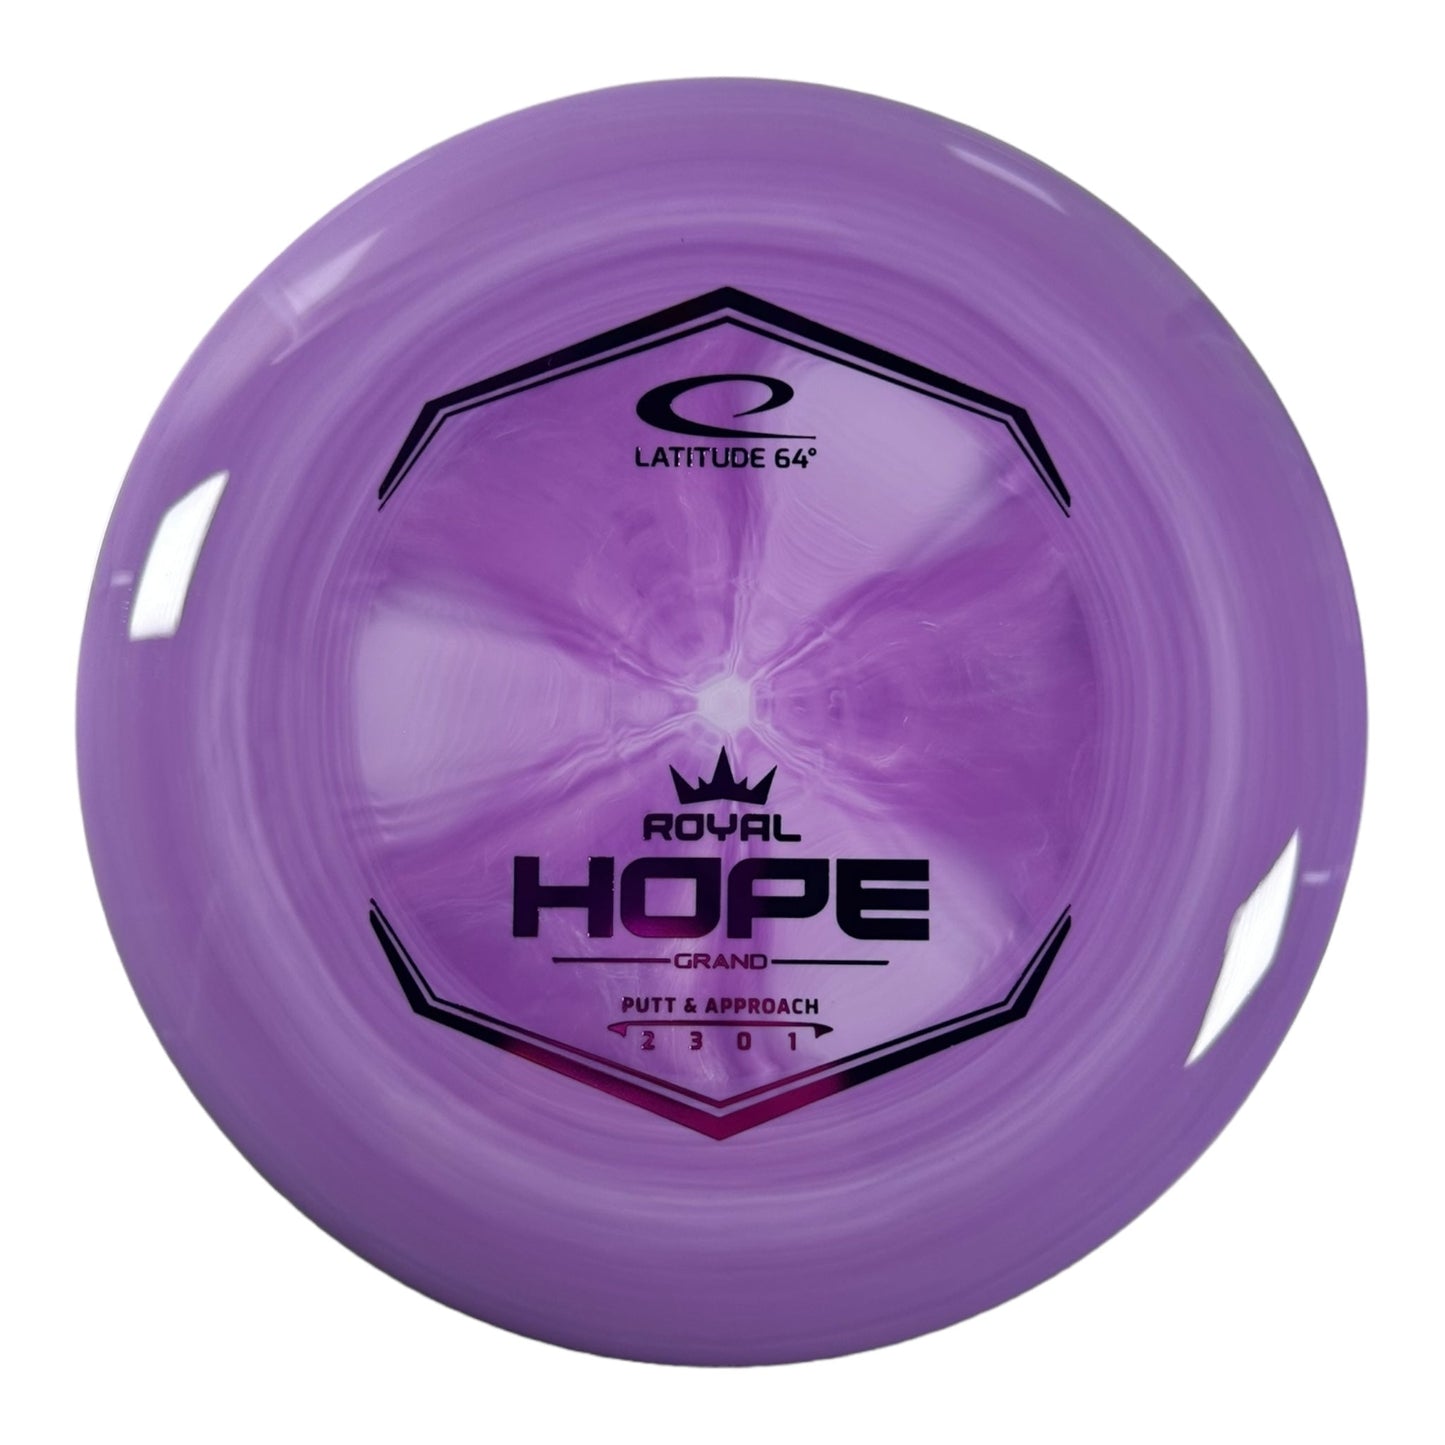 Latitude 64 Hope | Royal Grand | Purple/Pink 175g Disc Golf